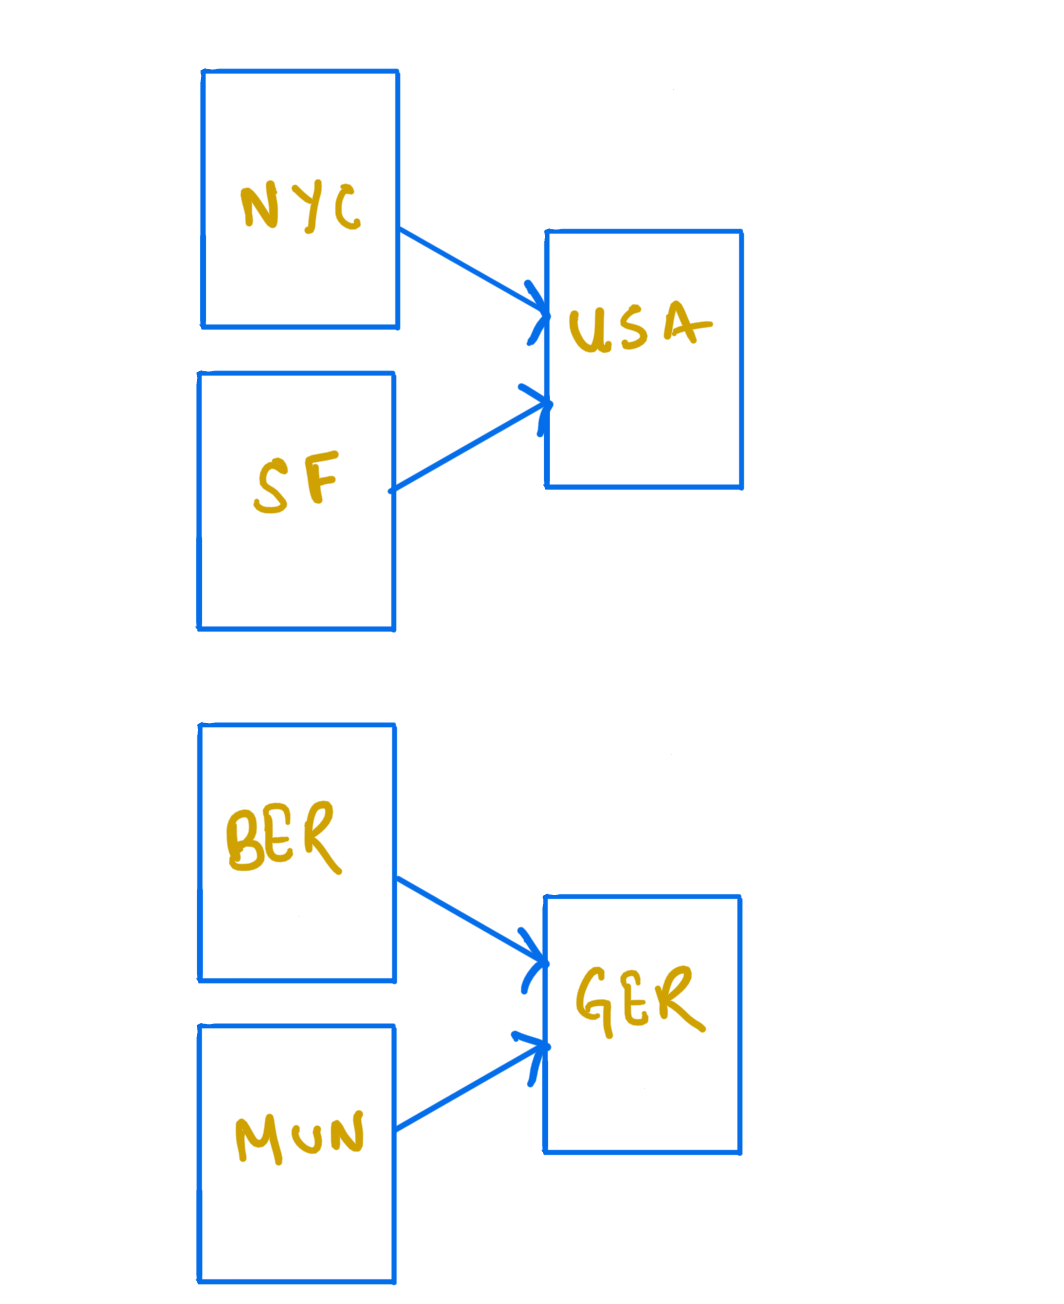 partial order locations